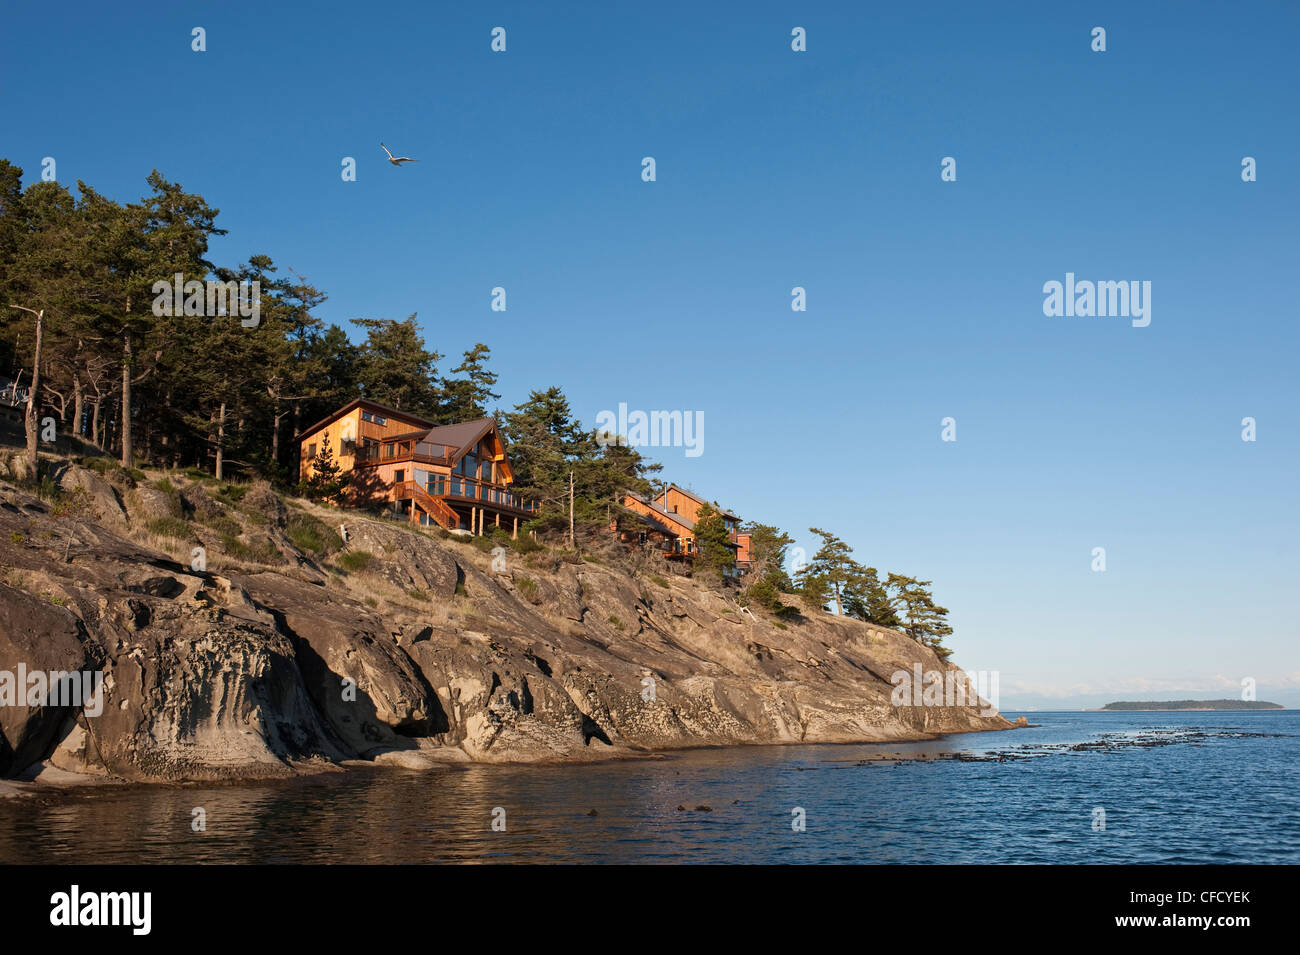 Ufergegendhäuser auf Saturna Island, British Columbia, Kanada Stockfoto